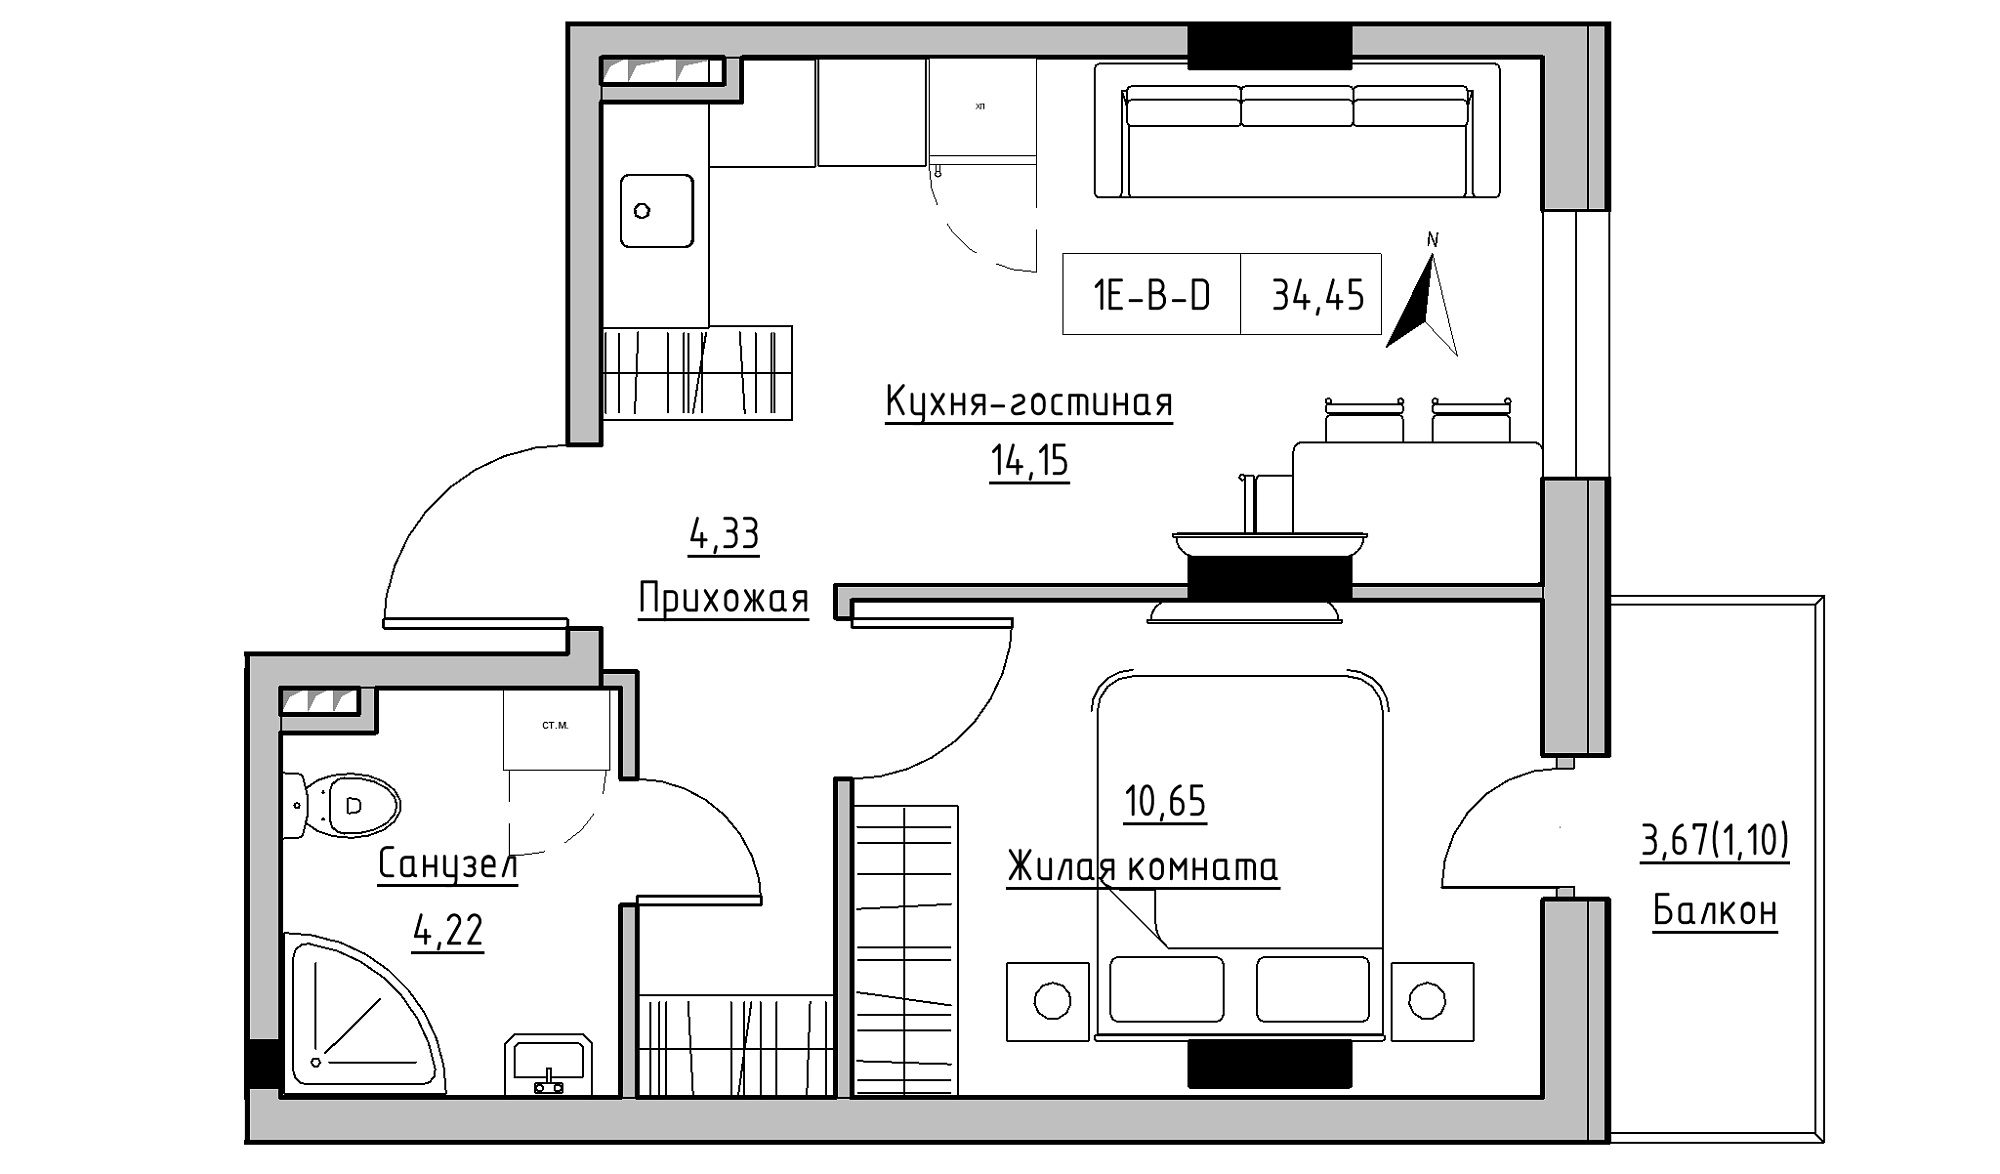 Planning 1-rm flats area 34.45m2, KS-025-02/0002.